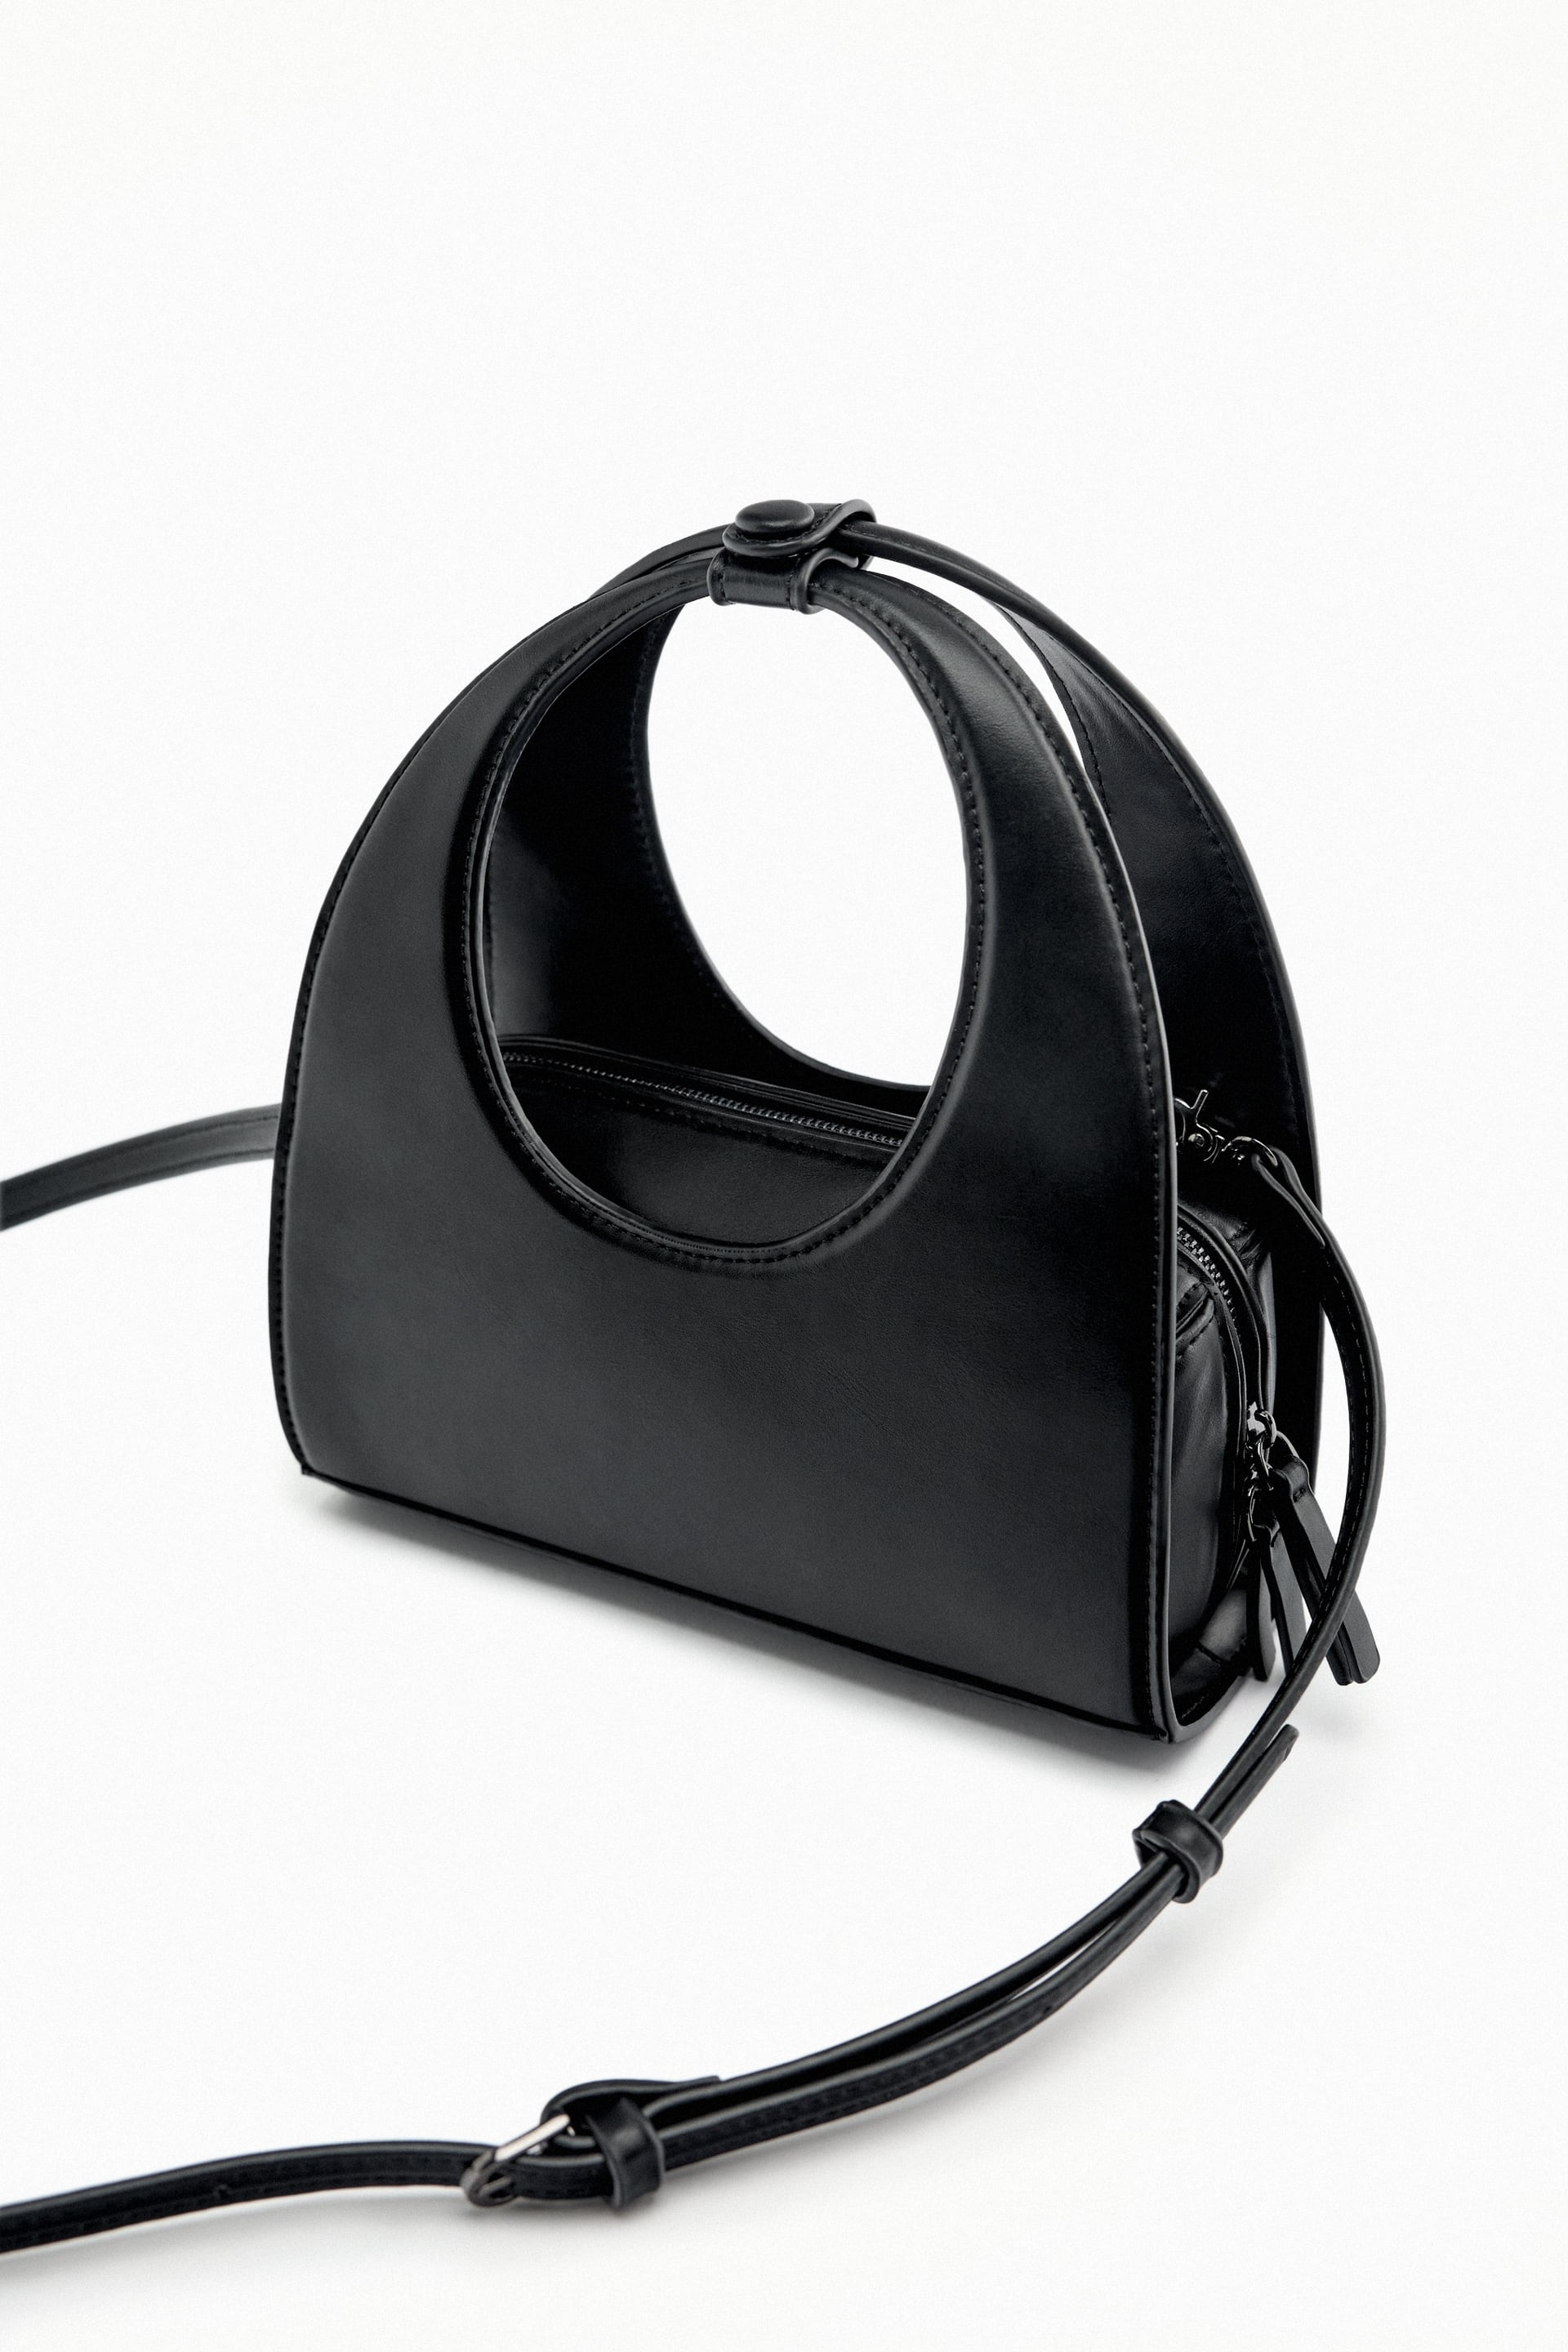 Zara | Bags | Zara Paper Bag | Poshmark